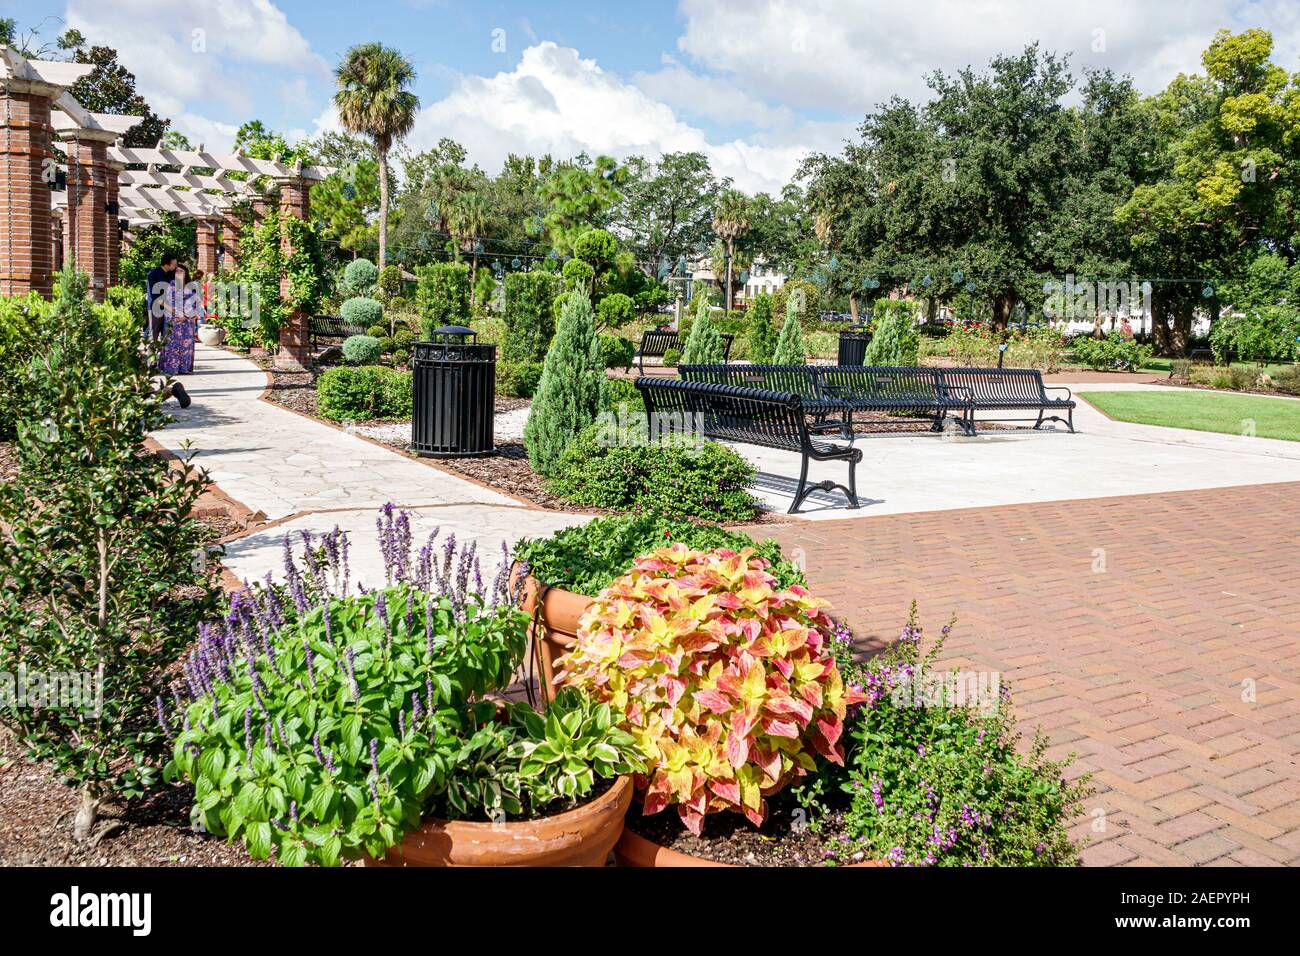 Orlando Winter Park Florida,Downtown,historic district,Central Park,public urban green space,garden,landscaping,walking path,bench,planter,FL191110077 Stock Photo